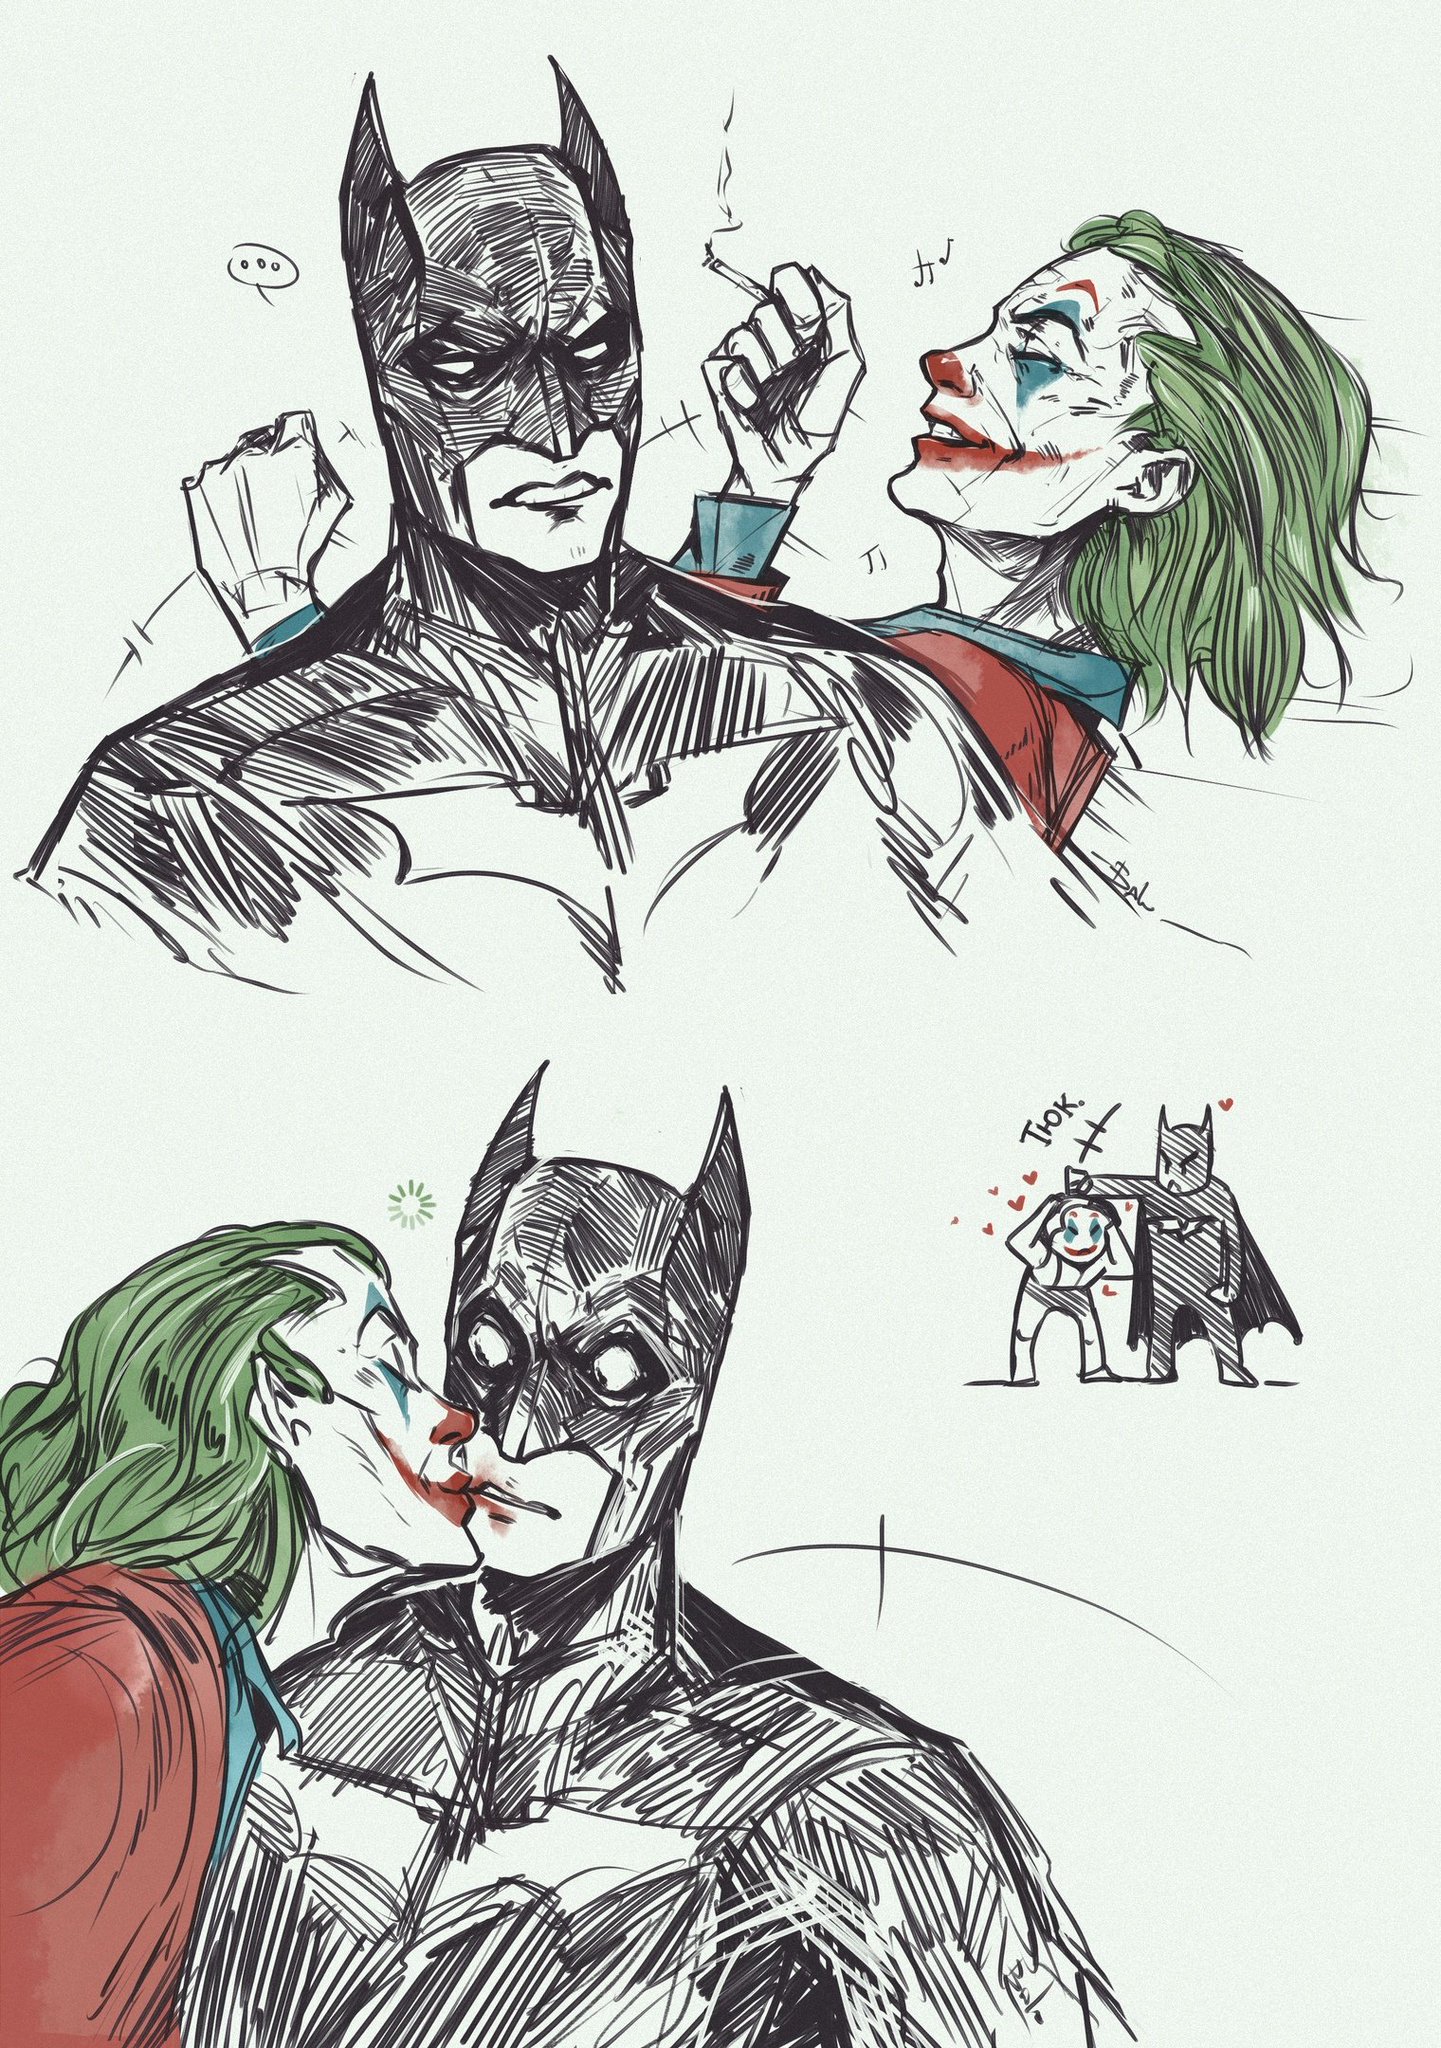 “#Joker #Batman #BatJokes 
Разницаввозрастеножвпеченьдоброизлонавер...